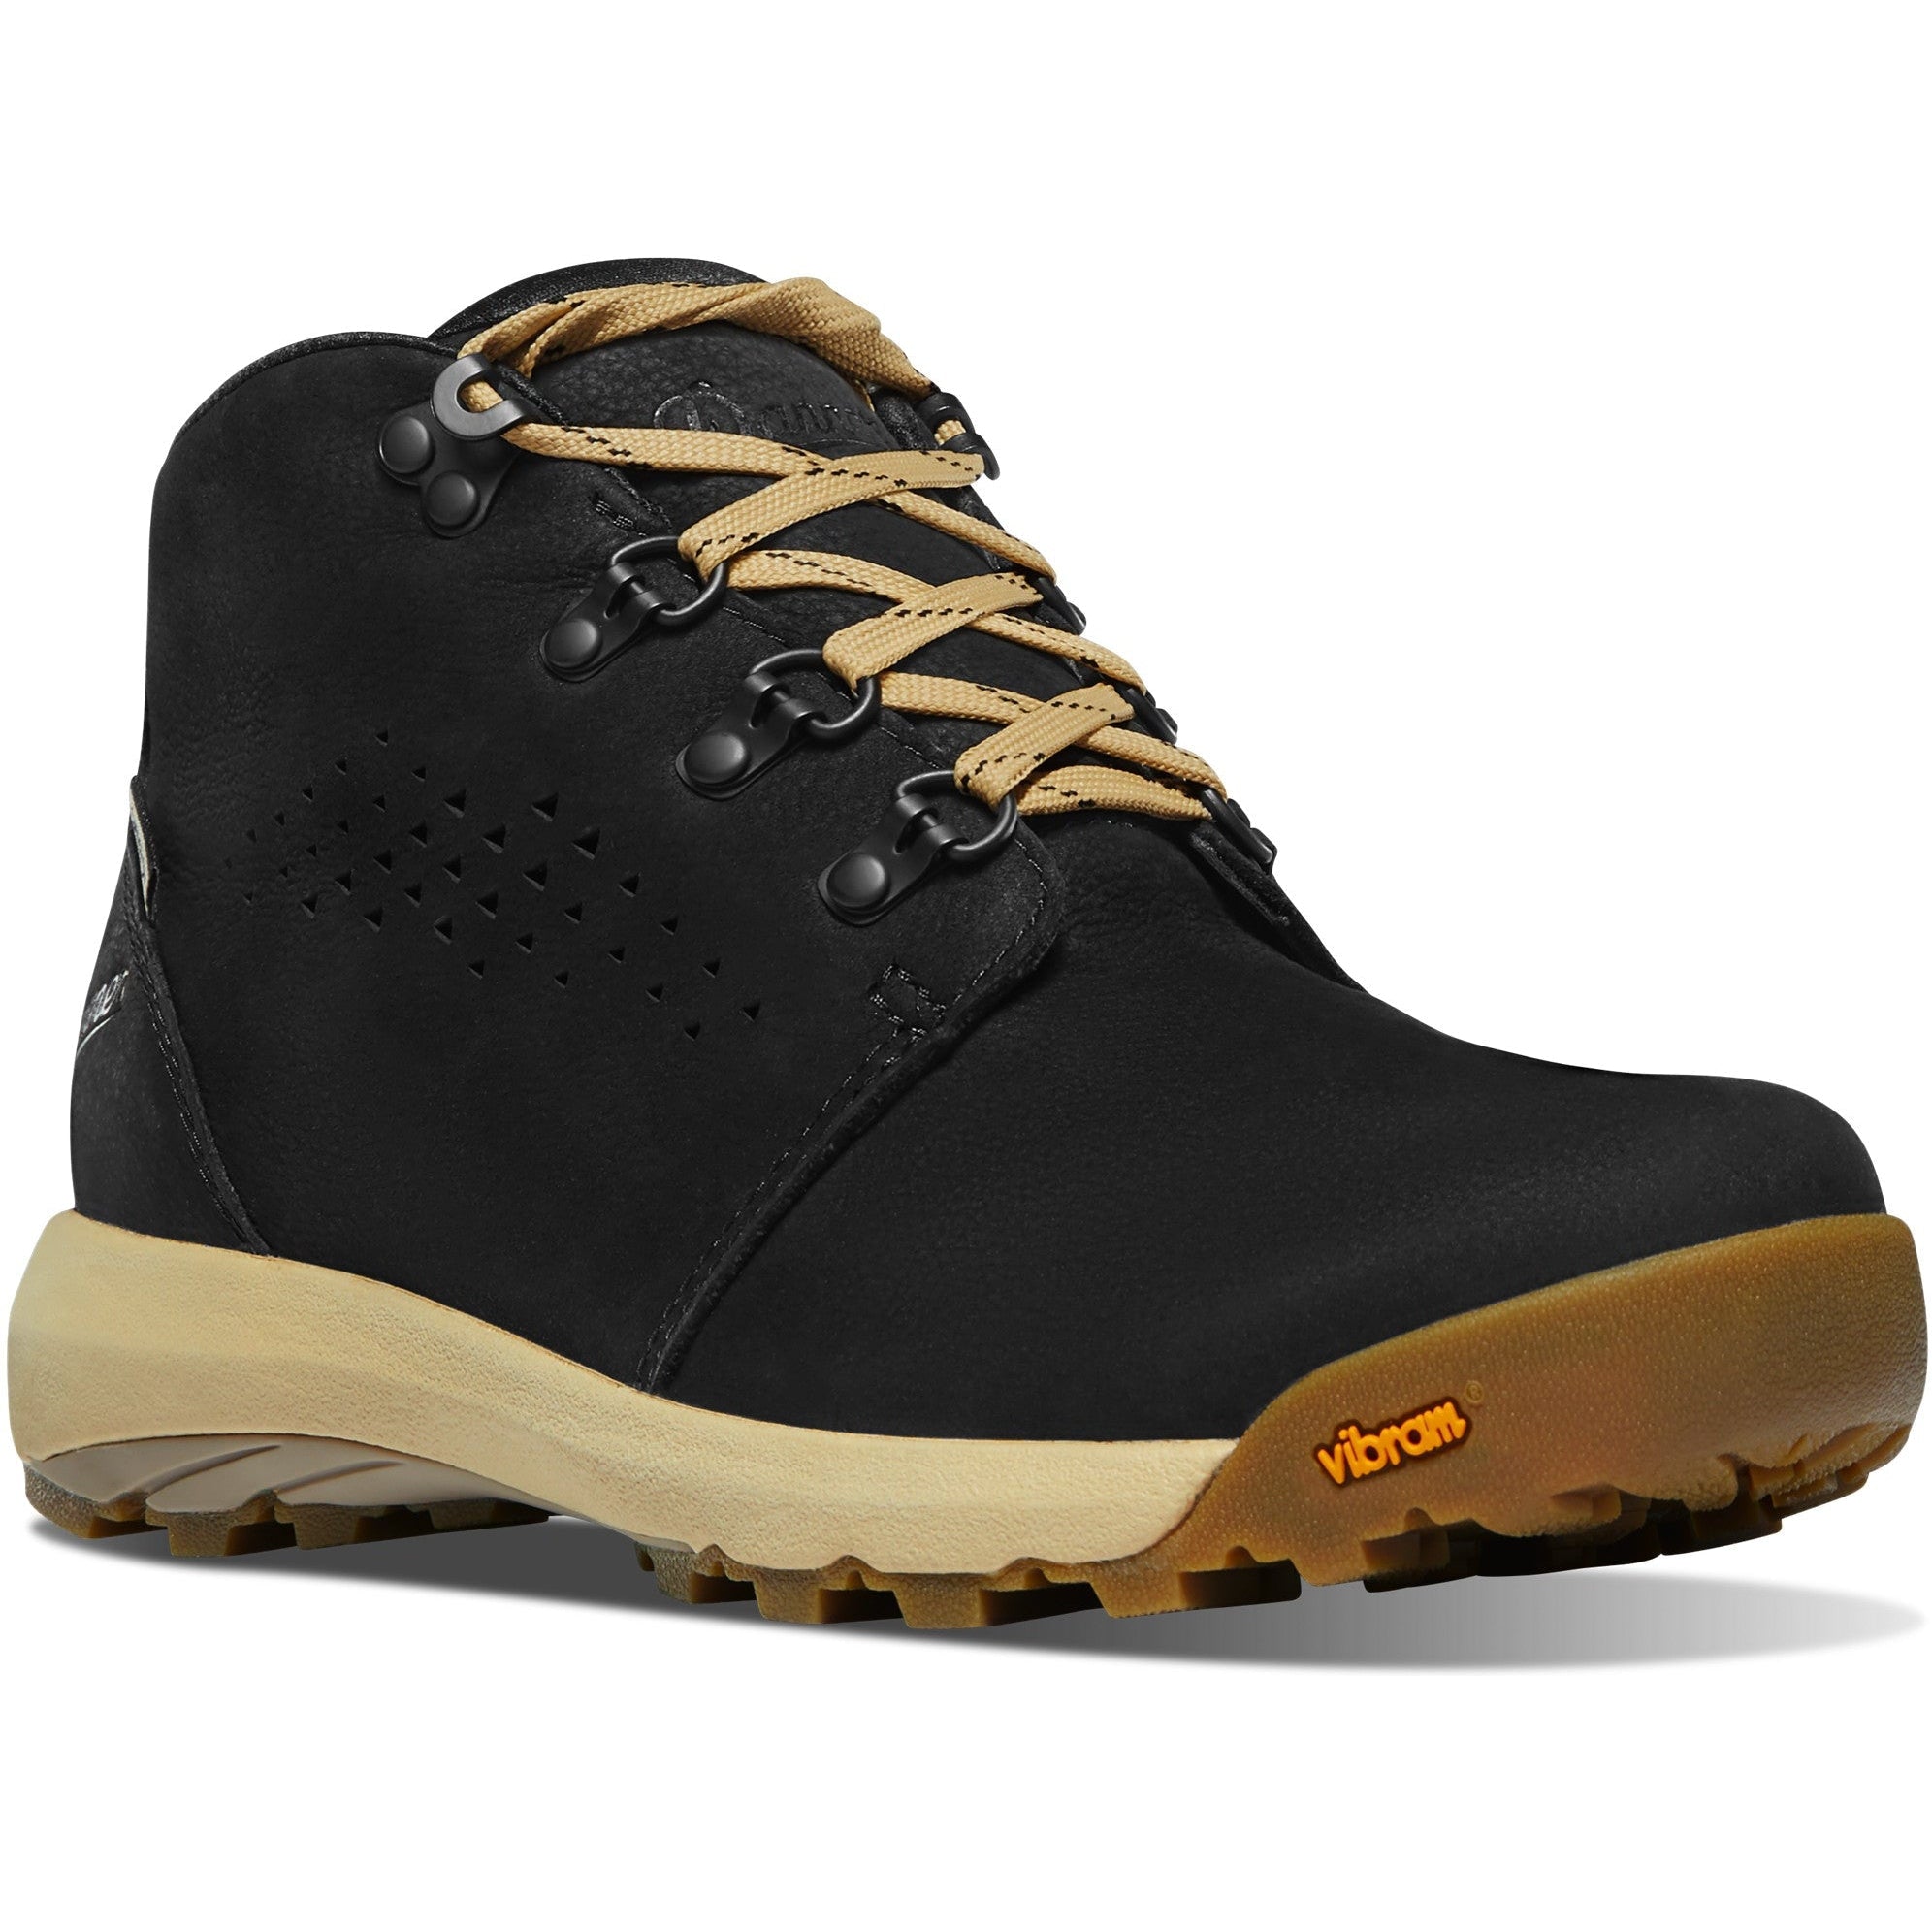 Danner Women's Inquire Chukka 4" WP Hiking Boot - Black - 64504 5 / Medium / Black - Overlook Boots